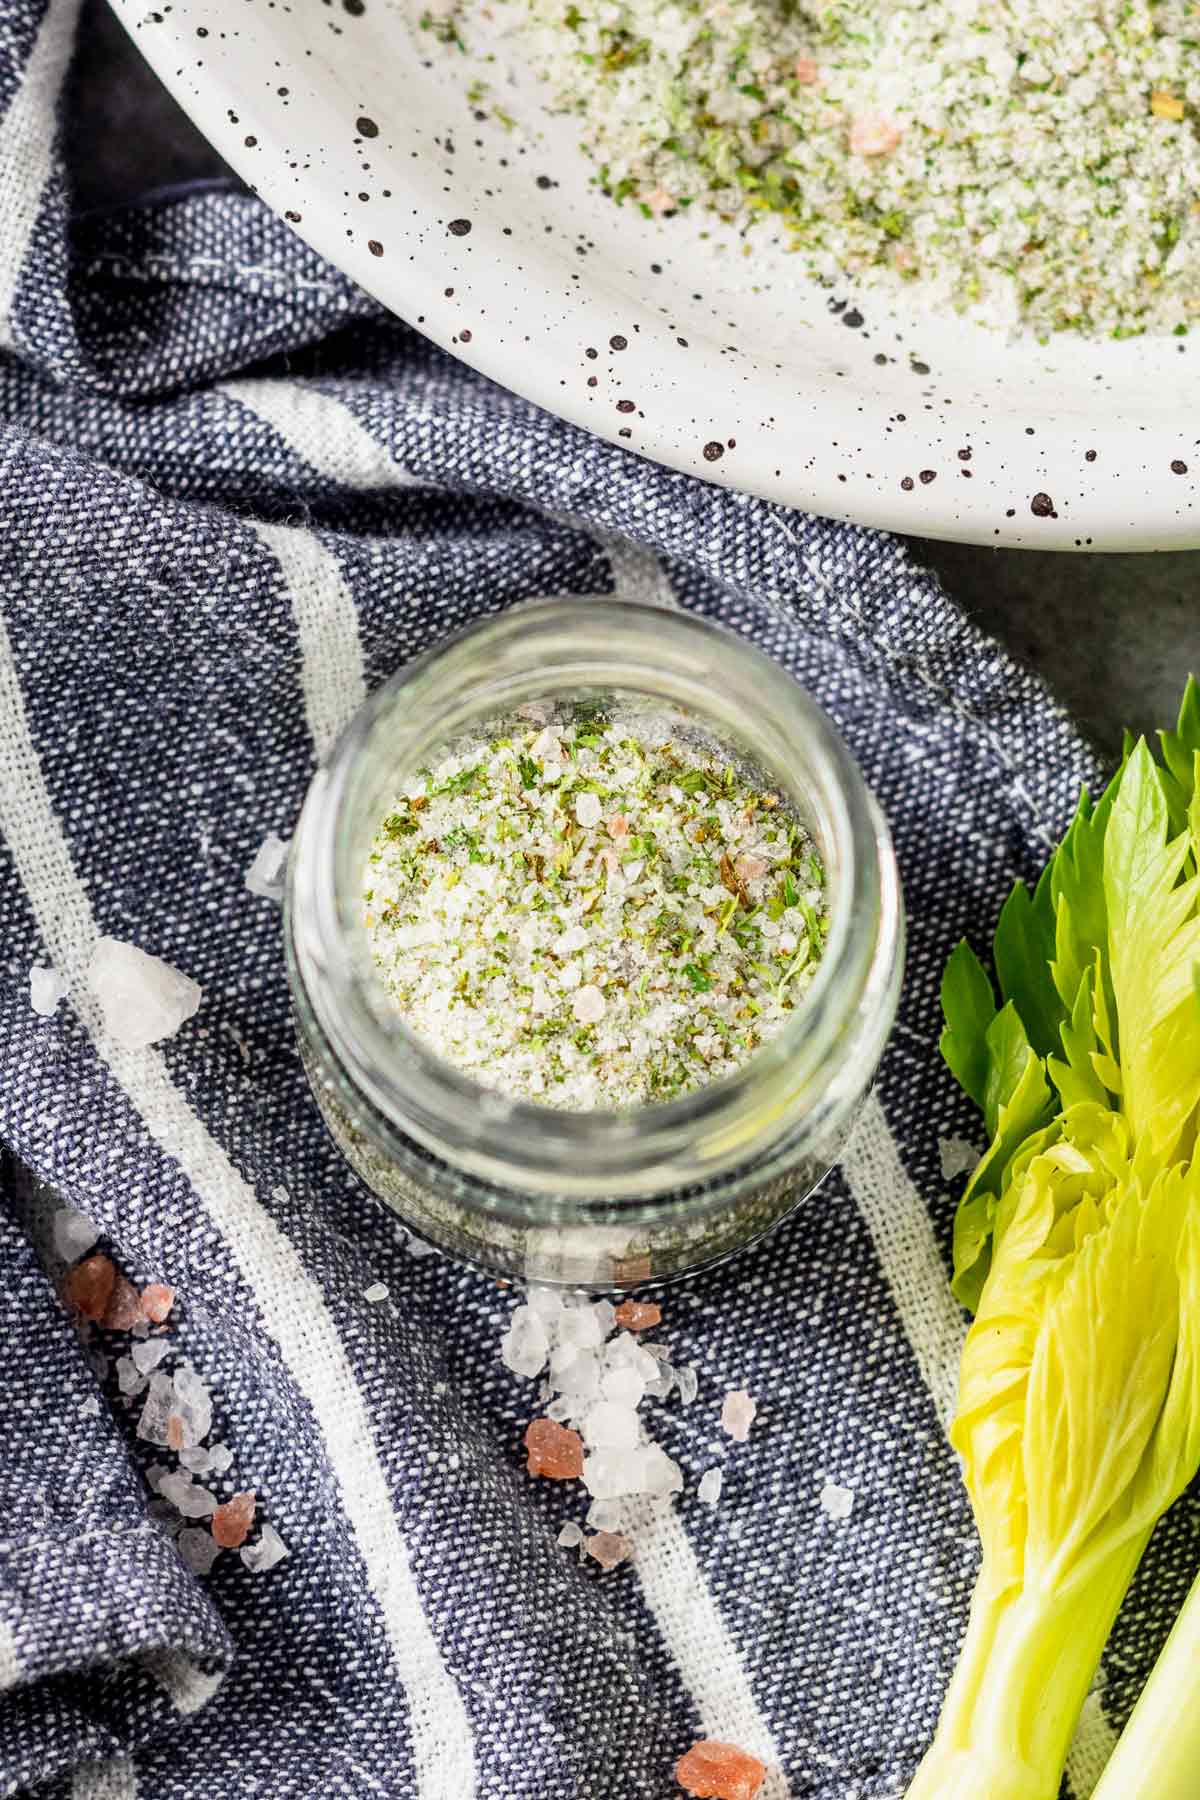 celery salt in a glass jar